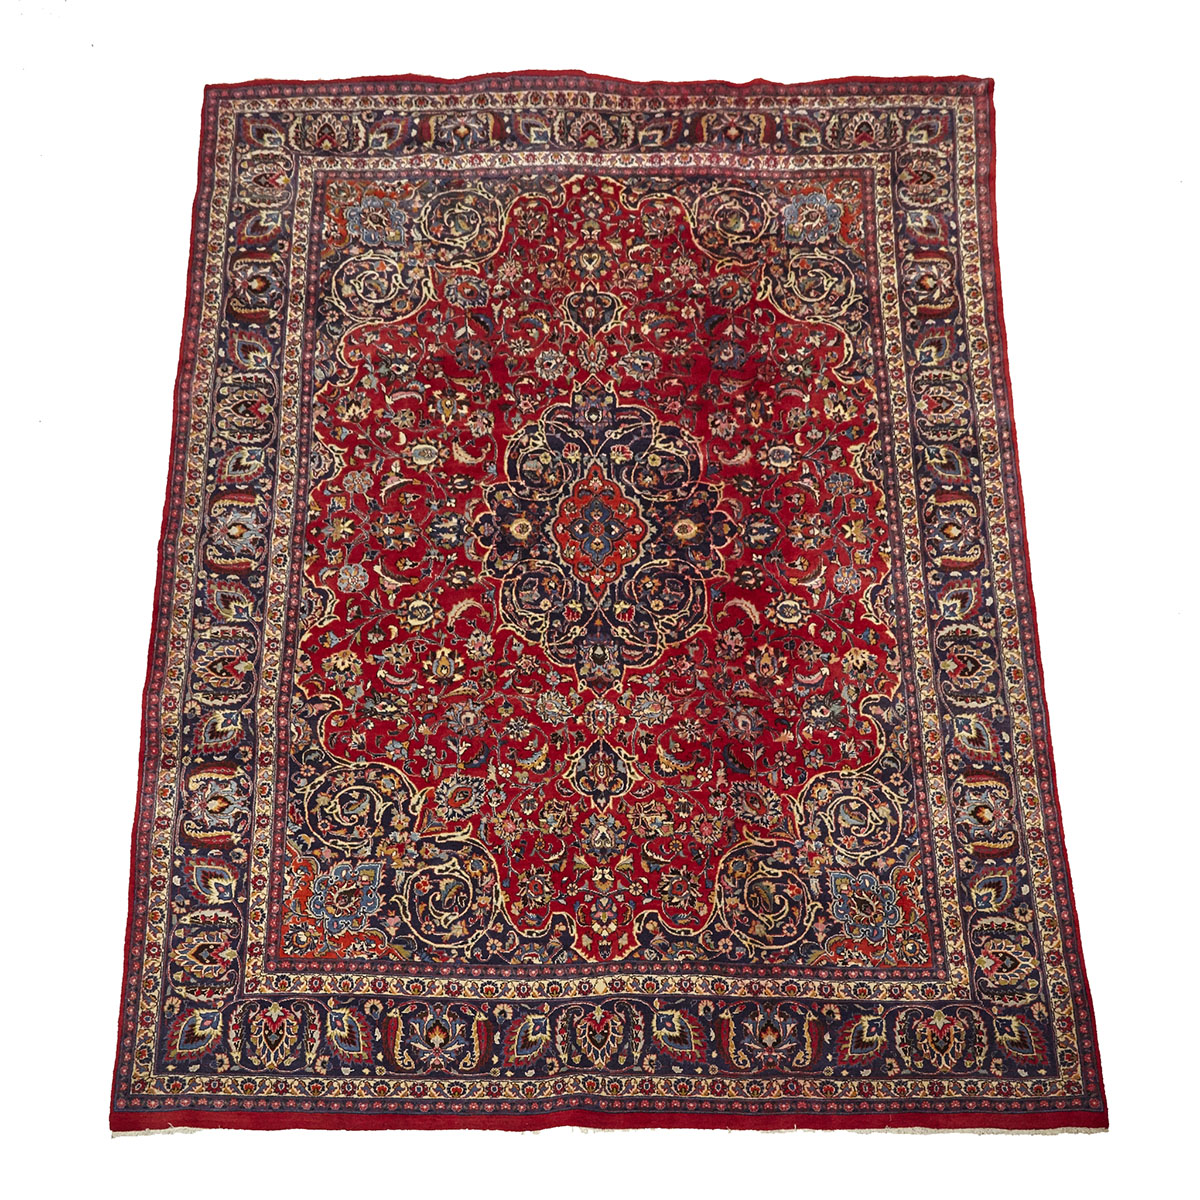 Sarouk Carpet, middle to late 20th century, Persian